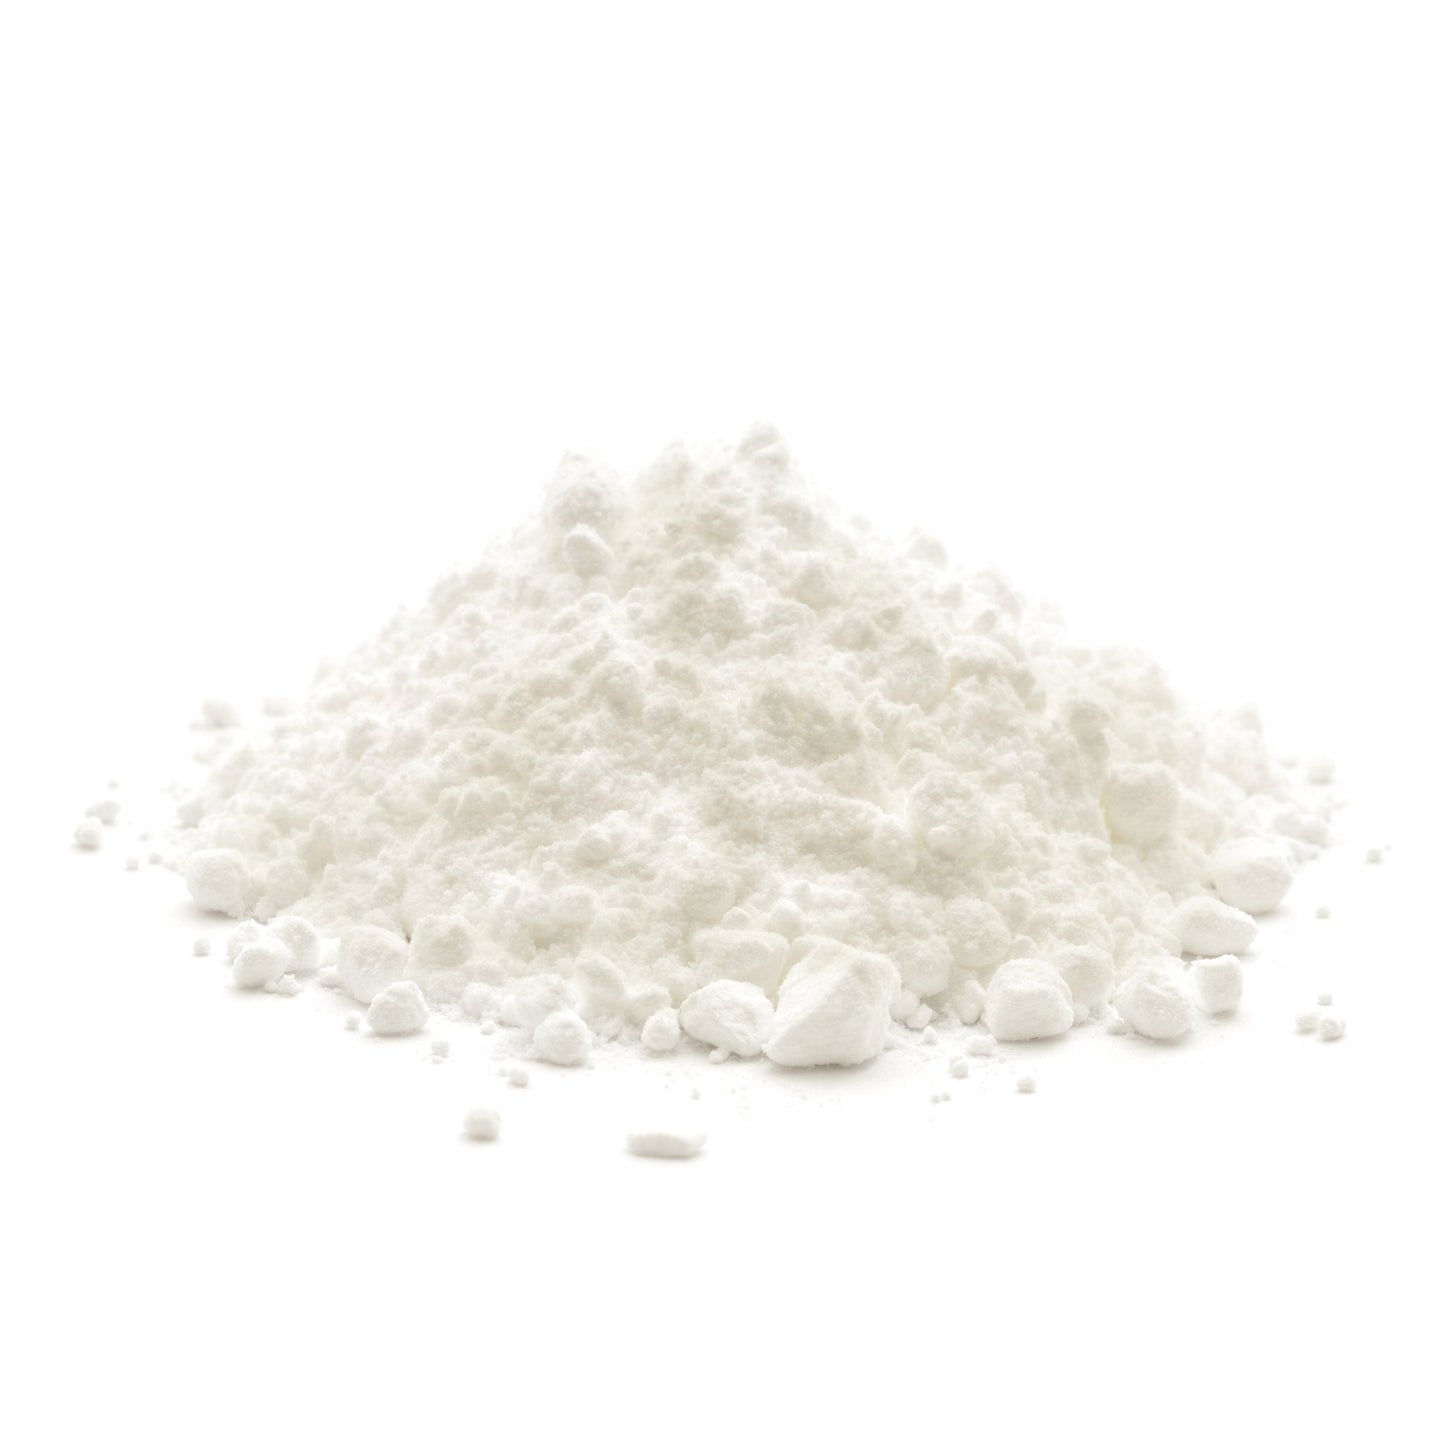 Powdered Maltitol